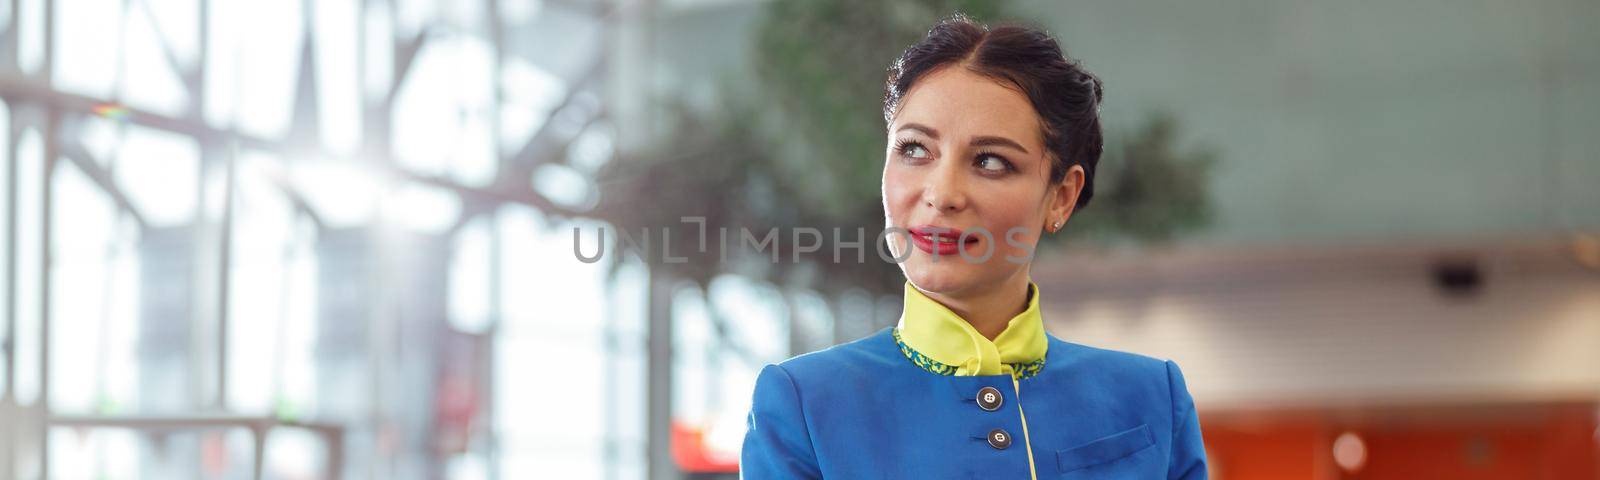 Female flight attendant standing in airport terminal by Yaroslav_astakhov